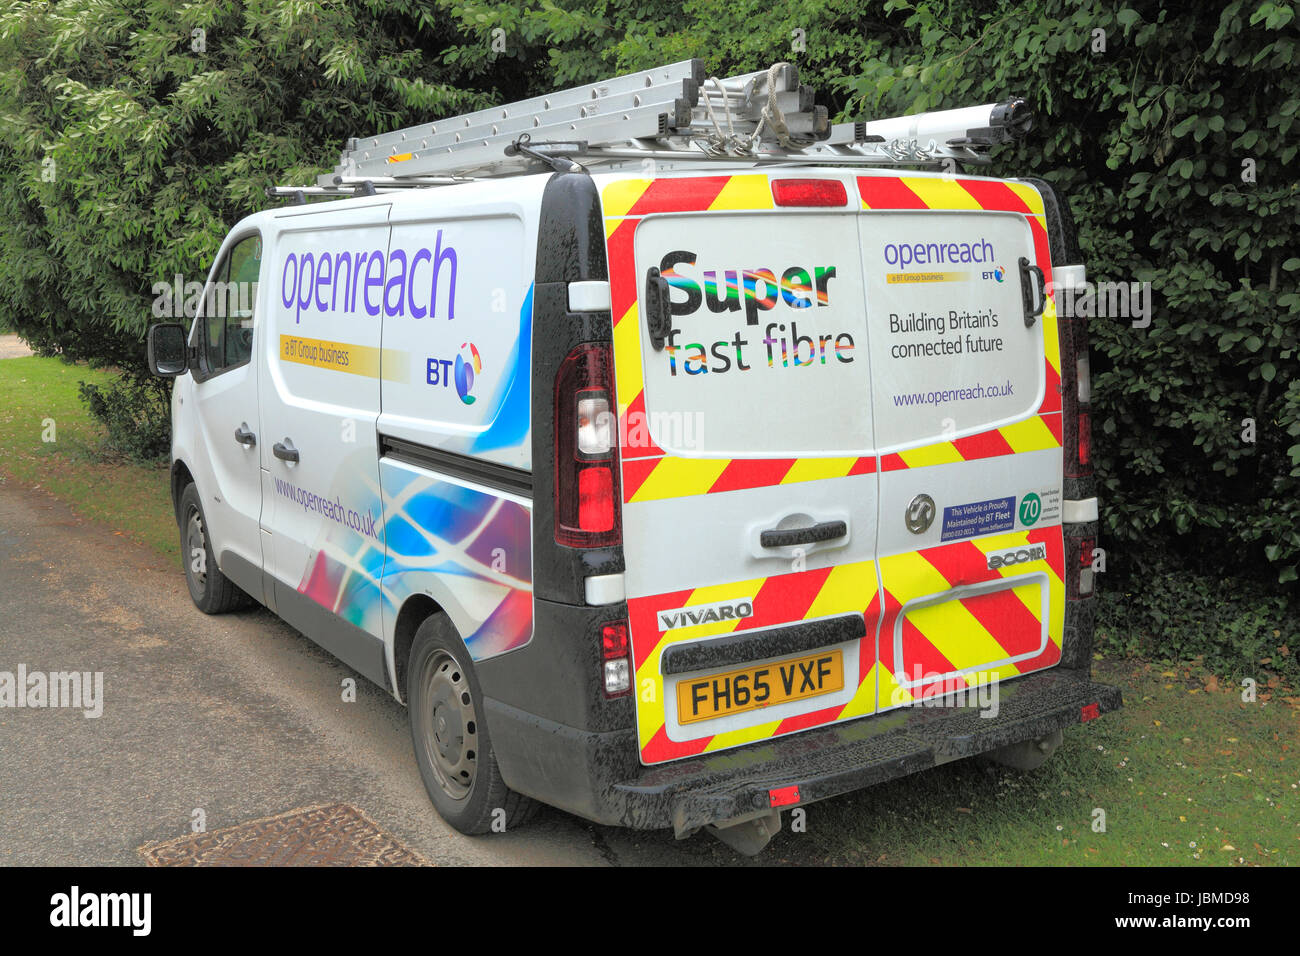 Open Reach, BT vehicle, van, 2015, Super Fast Fibre Broadband, British Telecom, England, UK Stock Photo